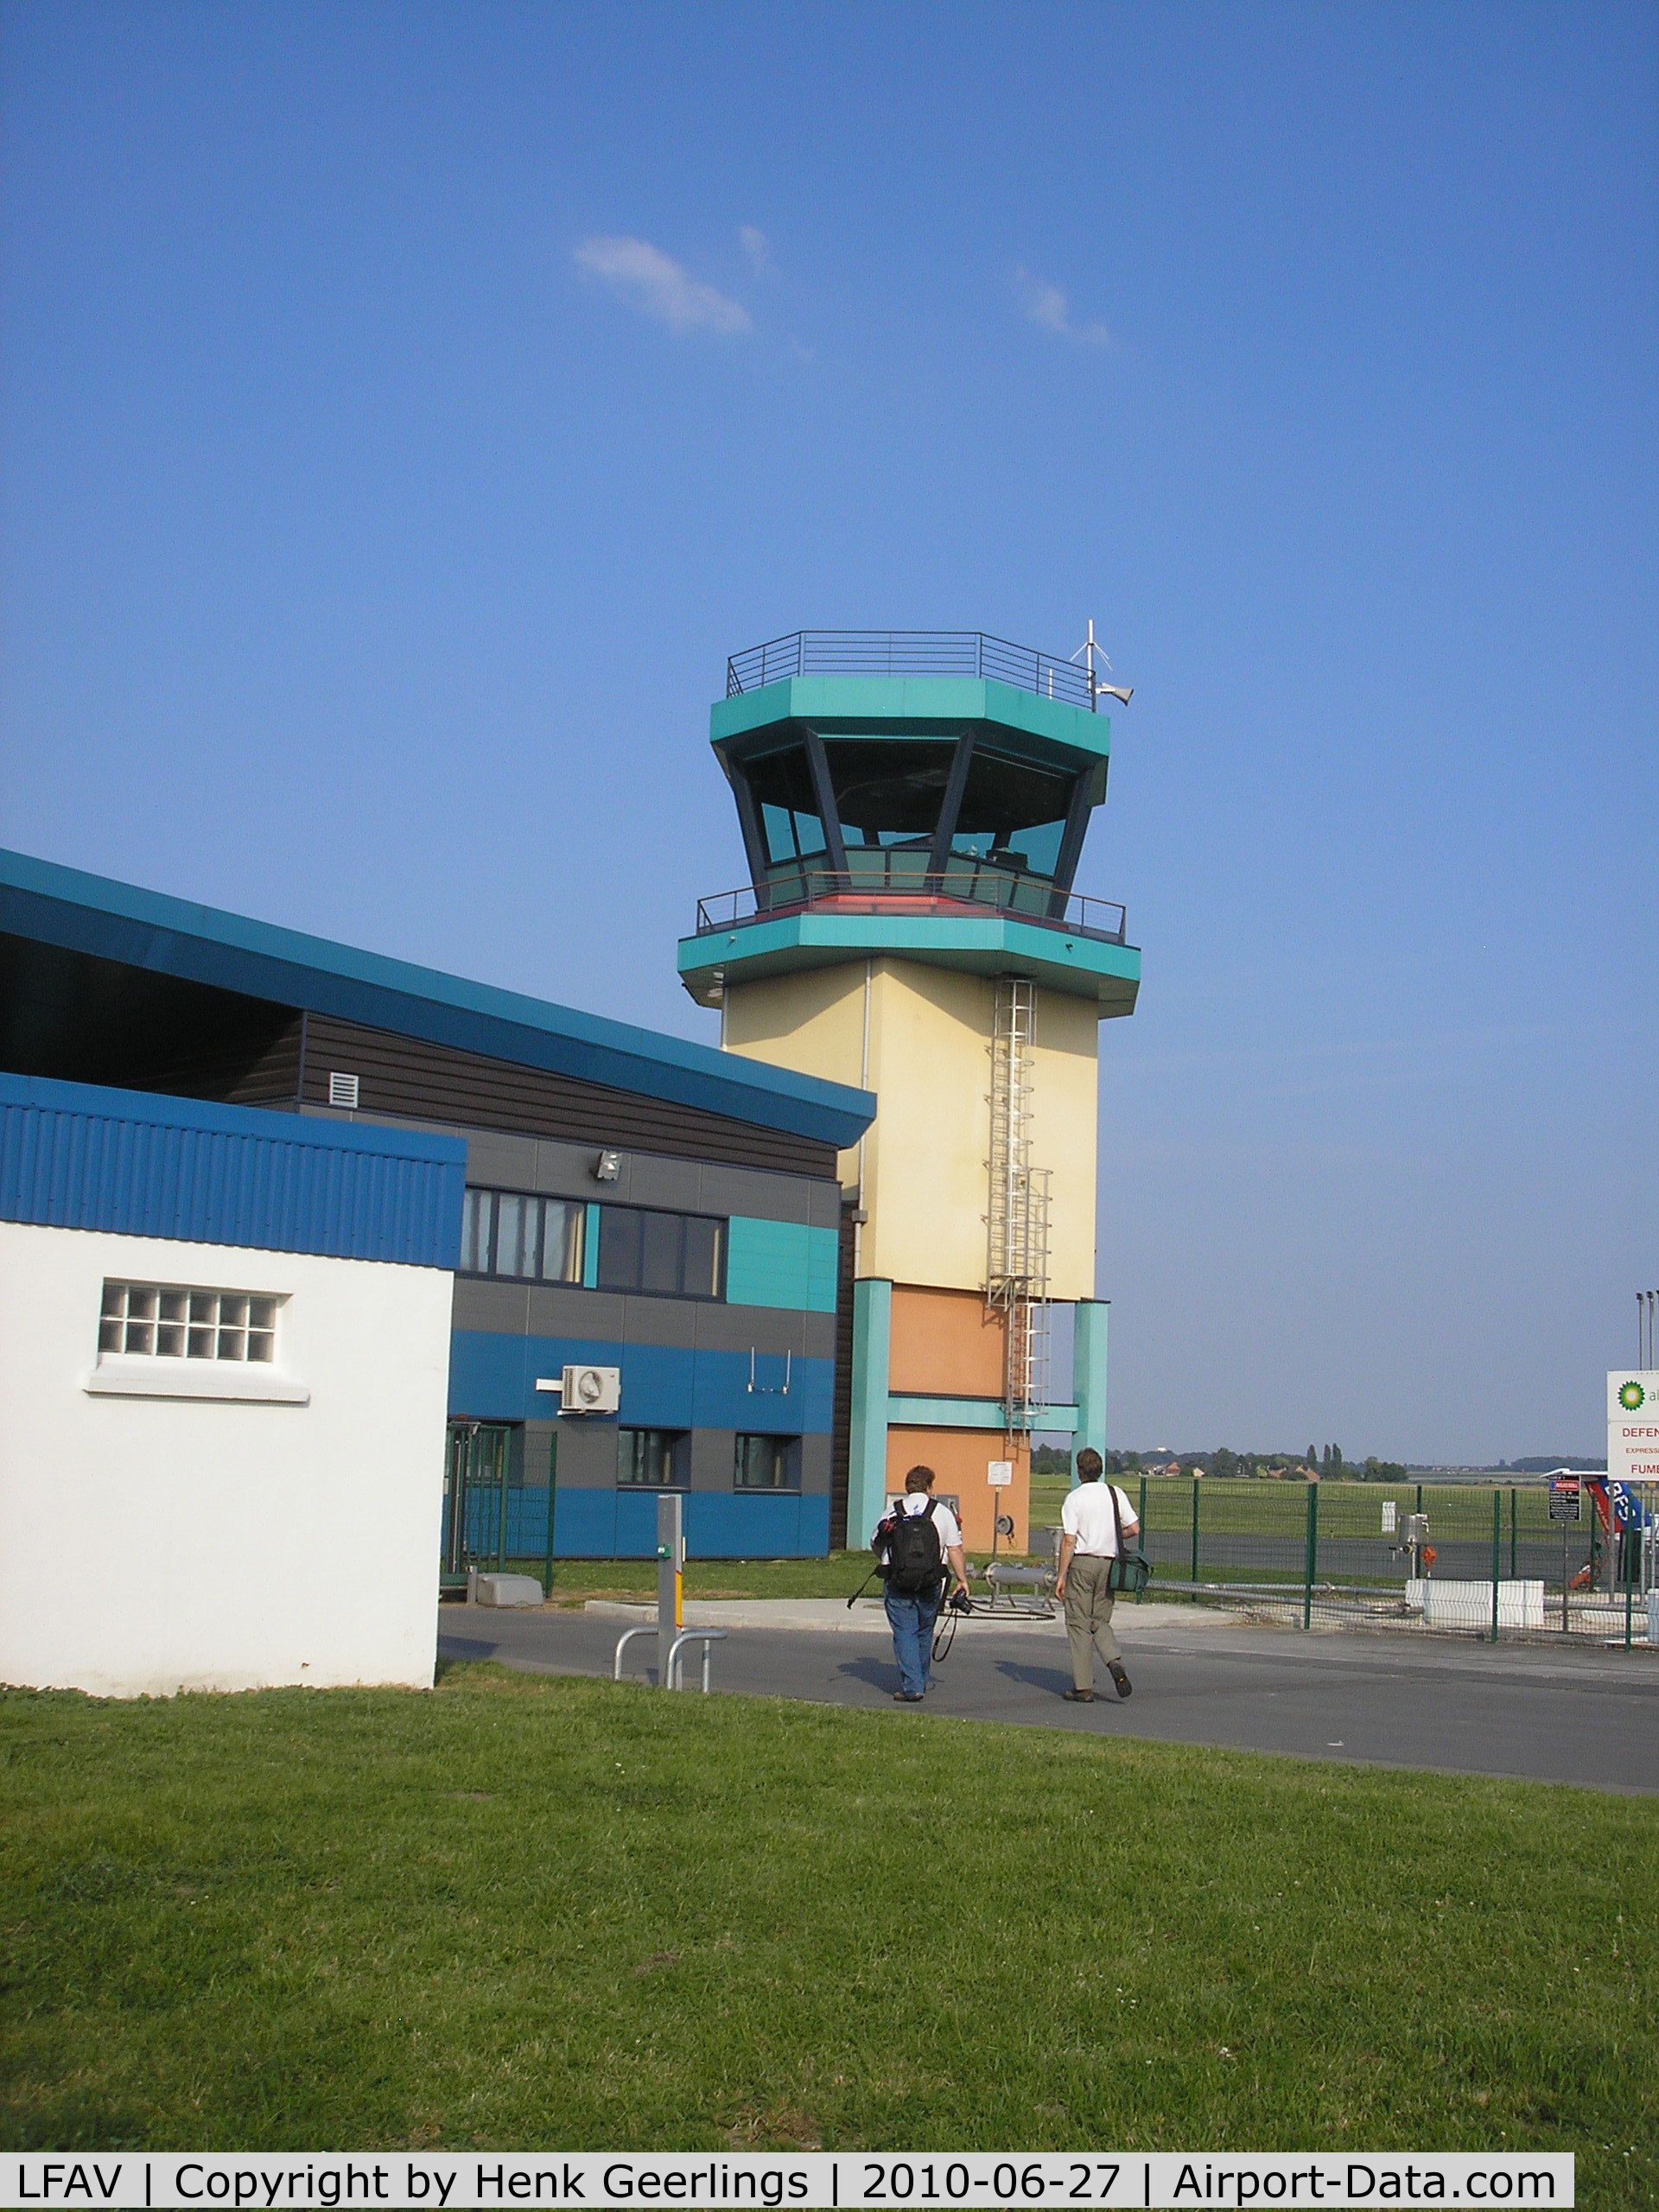 Valenciennes Airport, Denain Airport France (LFAV) - Tower. Denain Airport